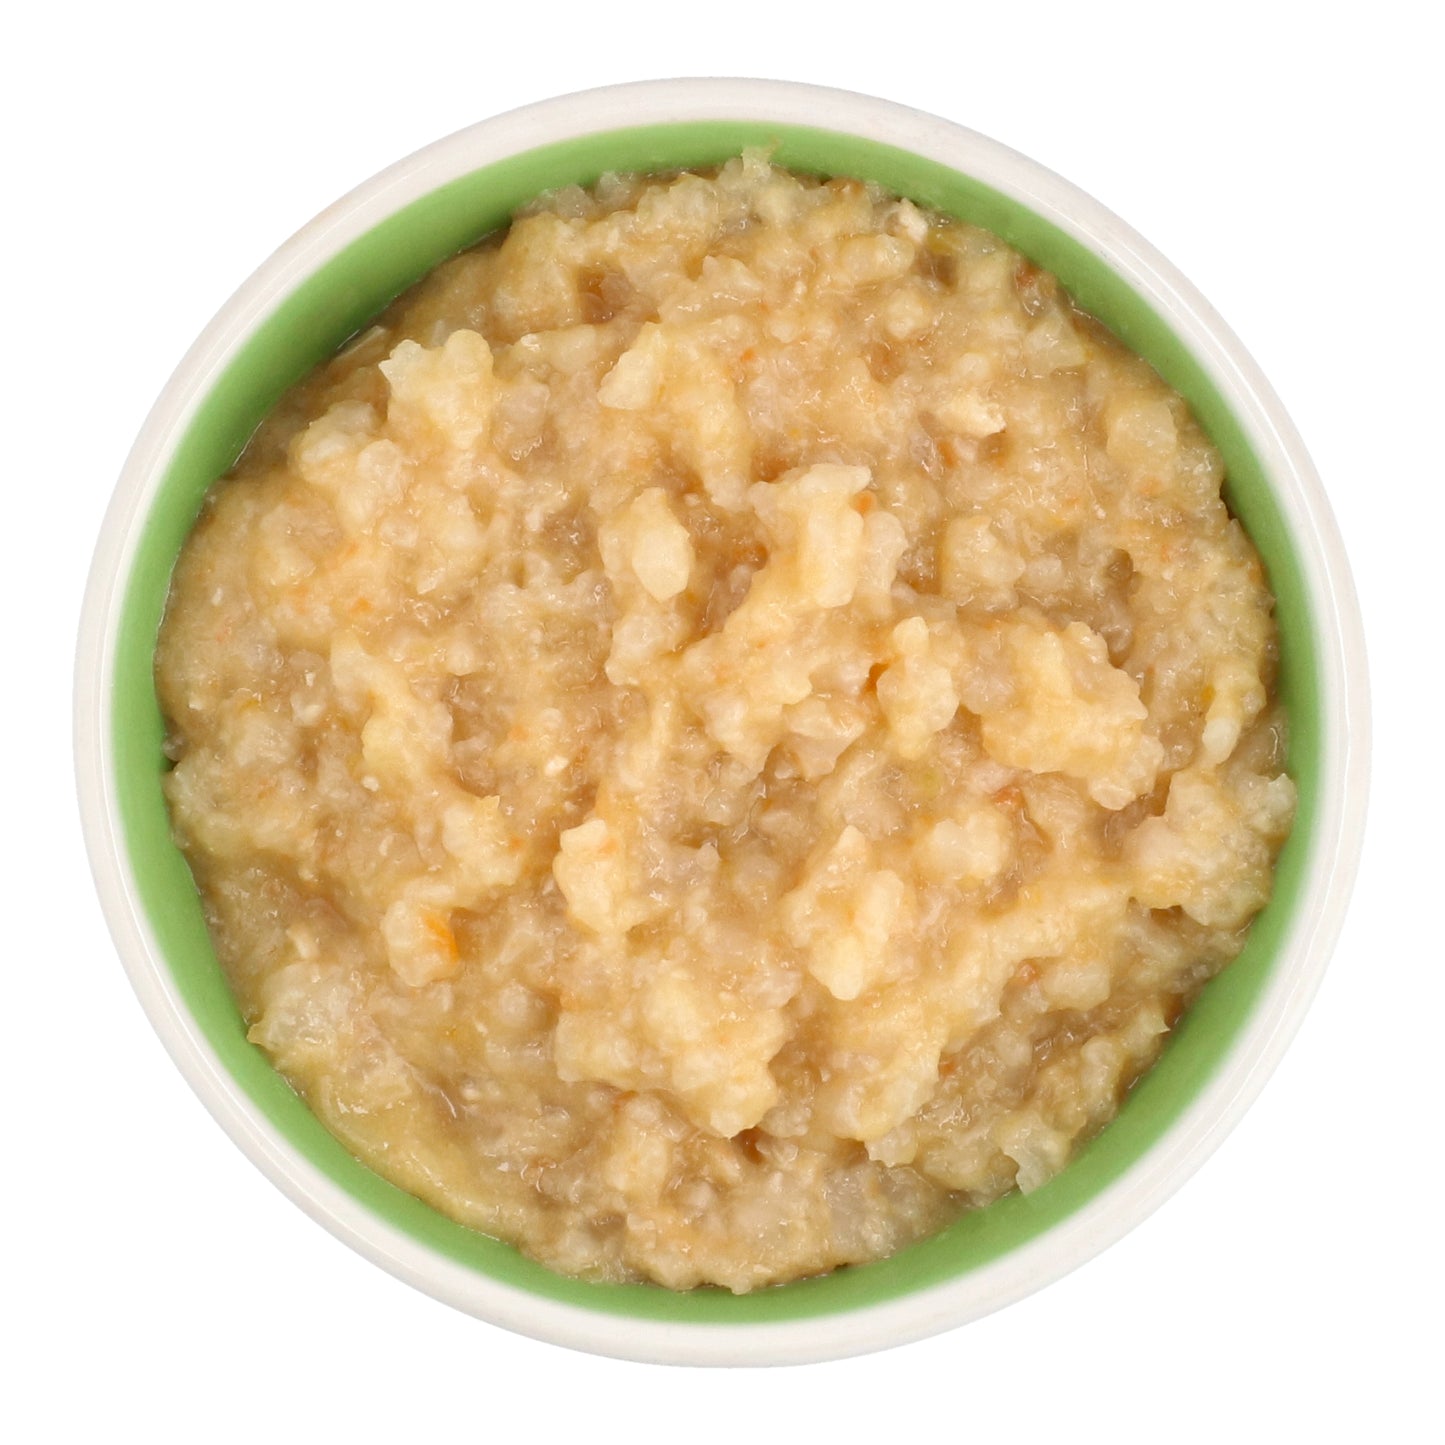 Eusik - 8-Pk Baby Rice Porridge (Cod & Soft Tofu) 145g, 8mths+